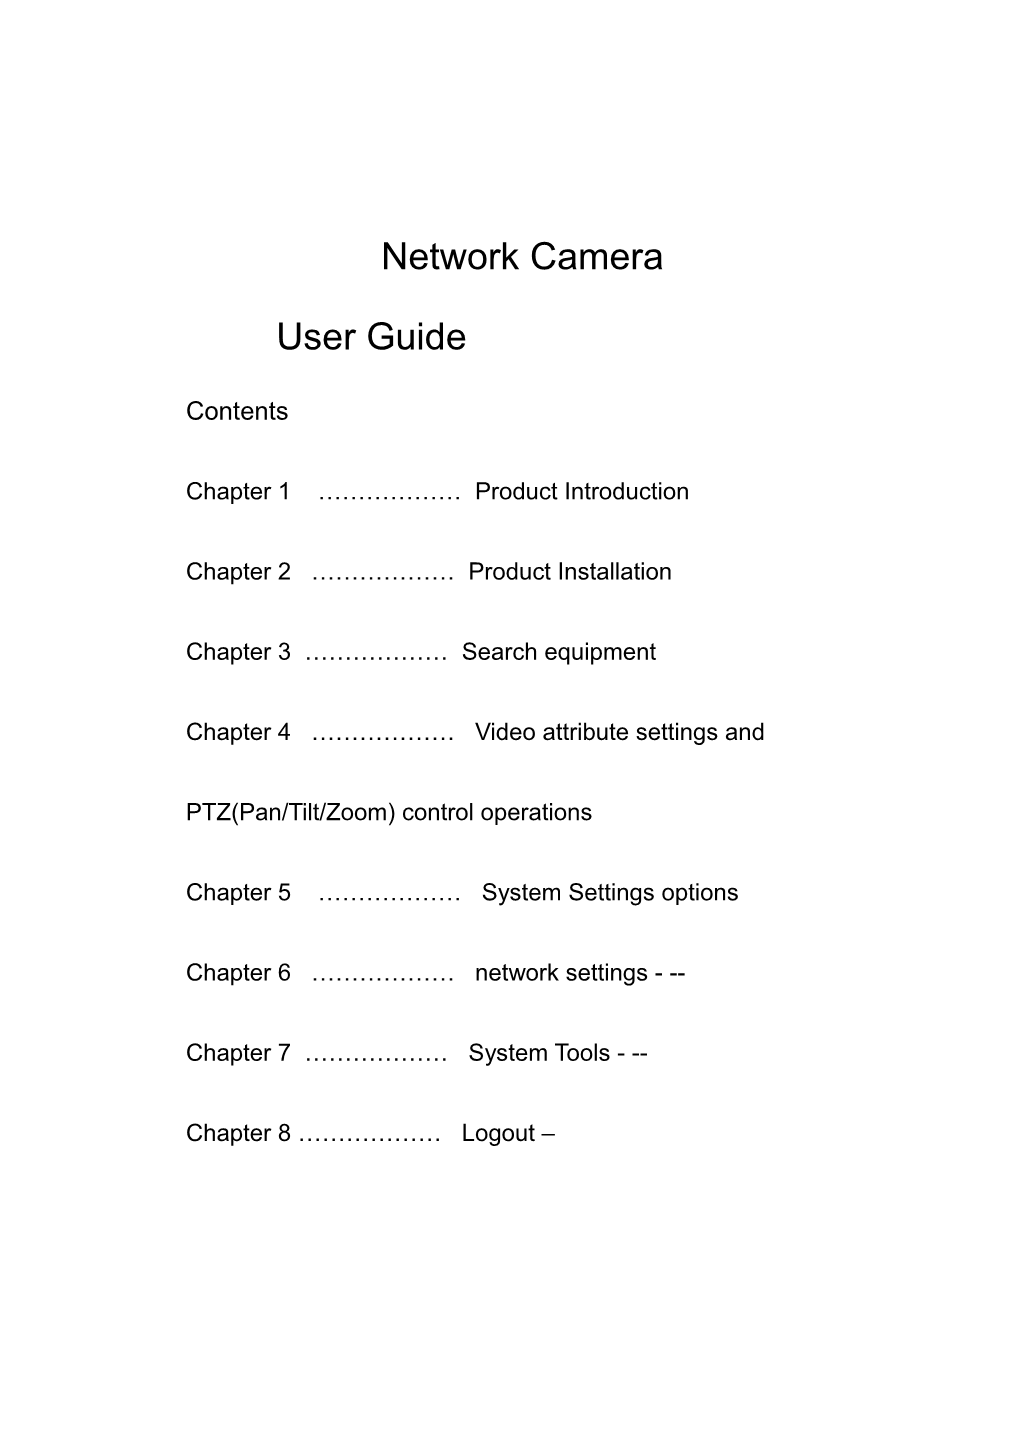 Network Camera User Guide